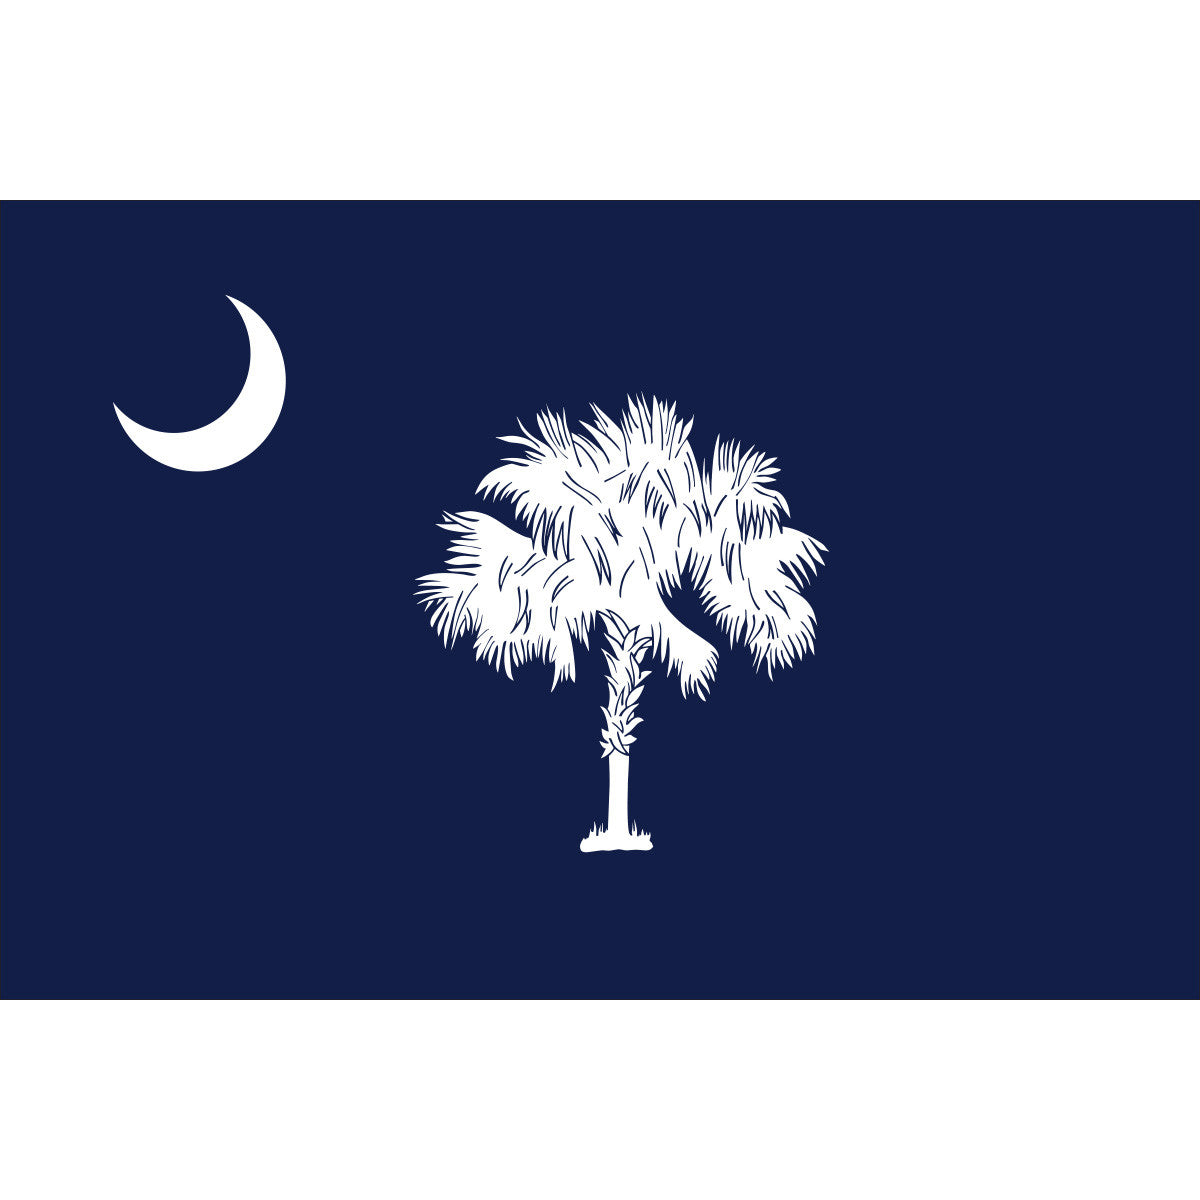 South Carolina State Flags